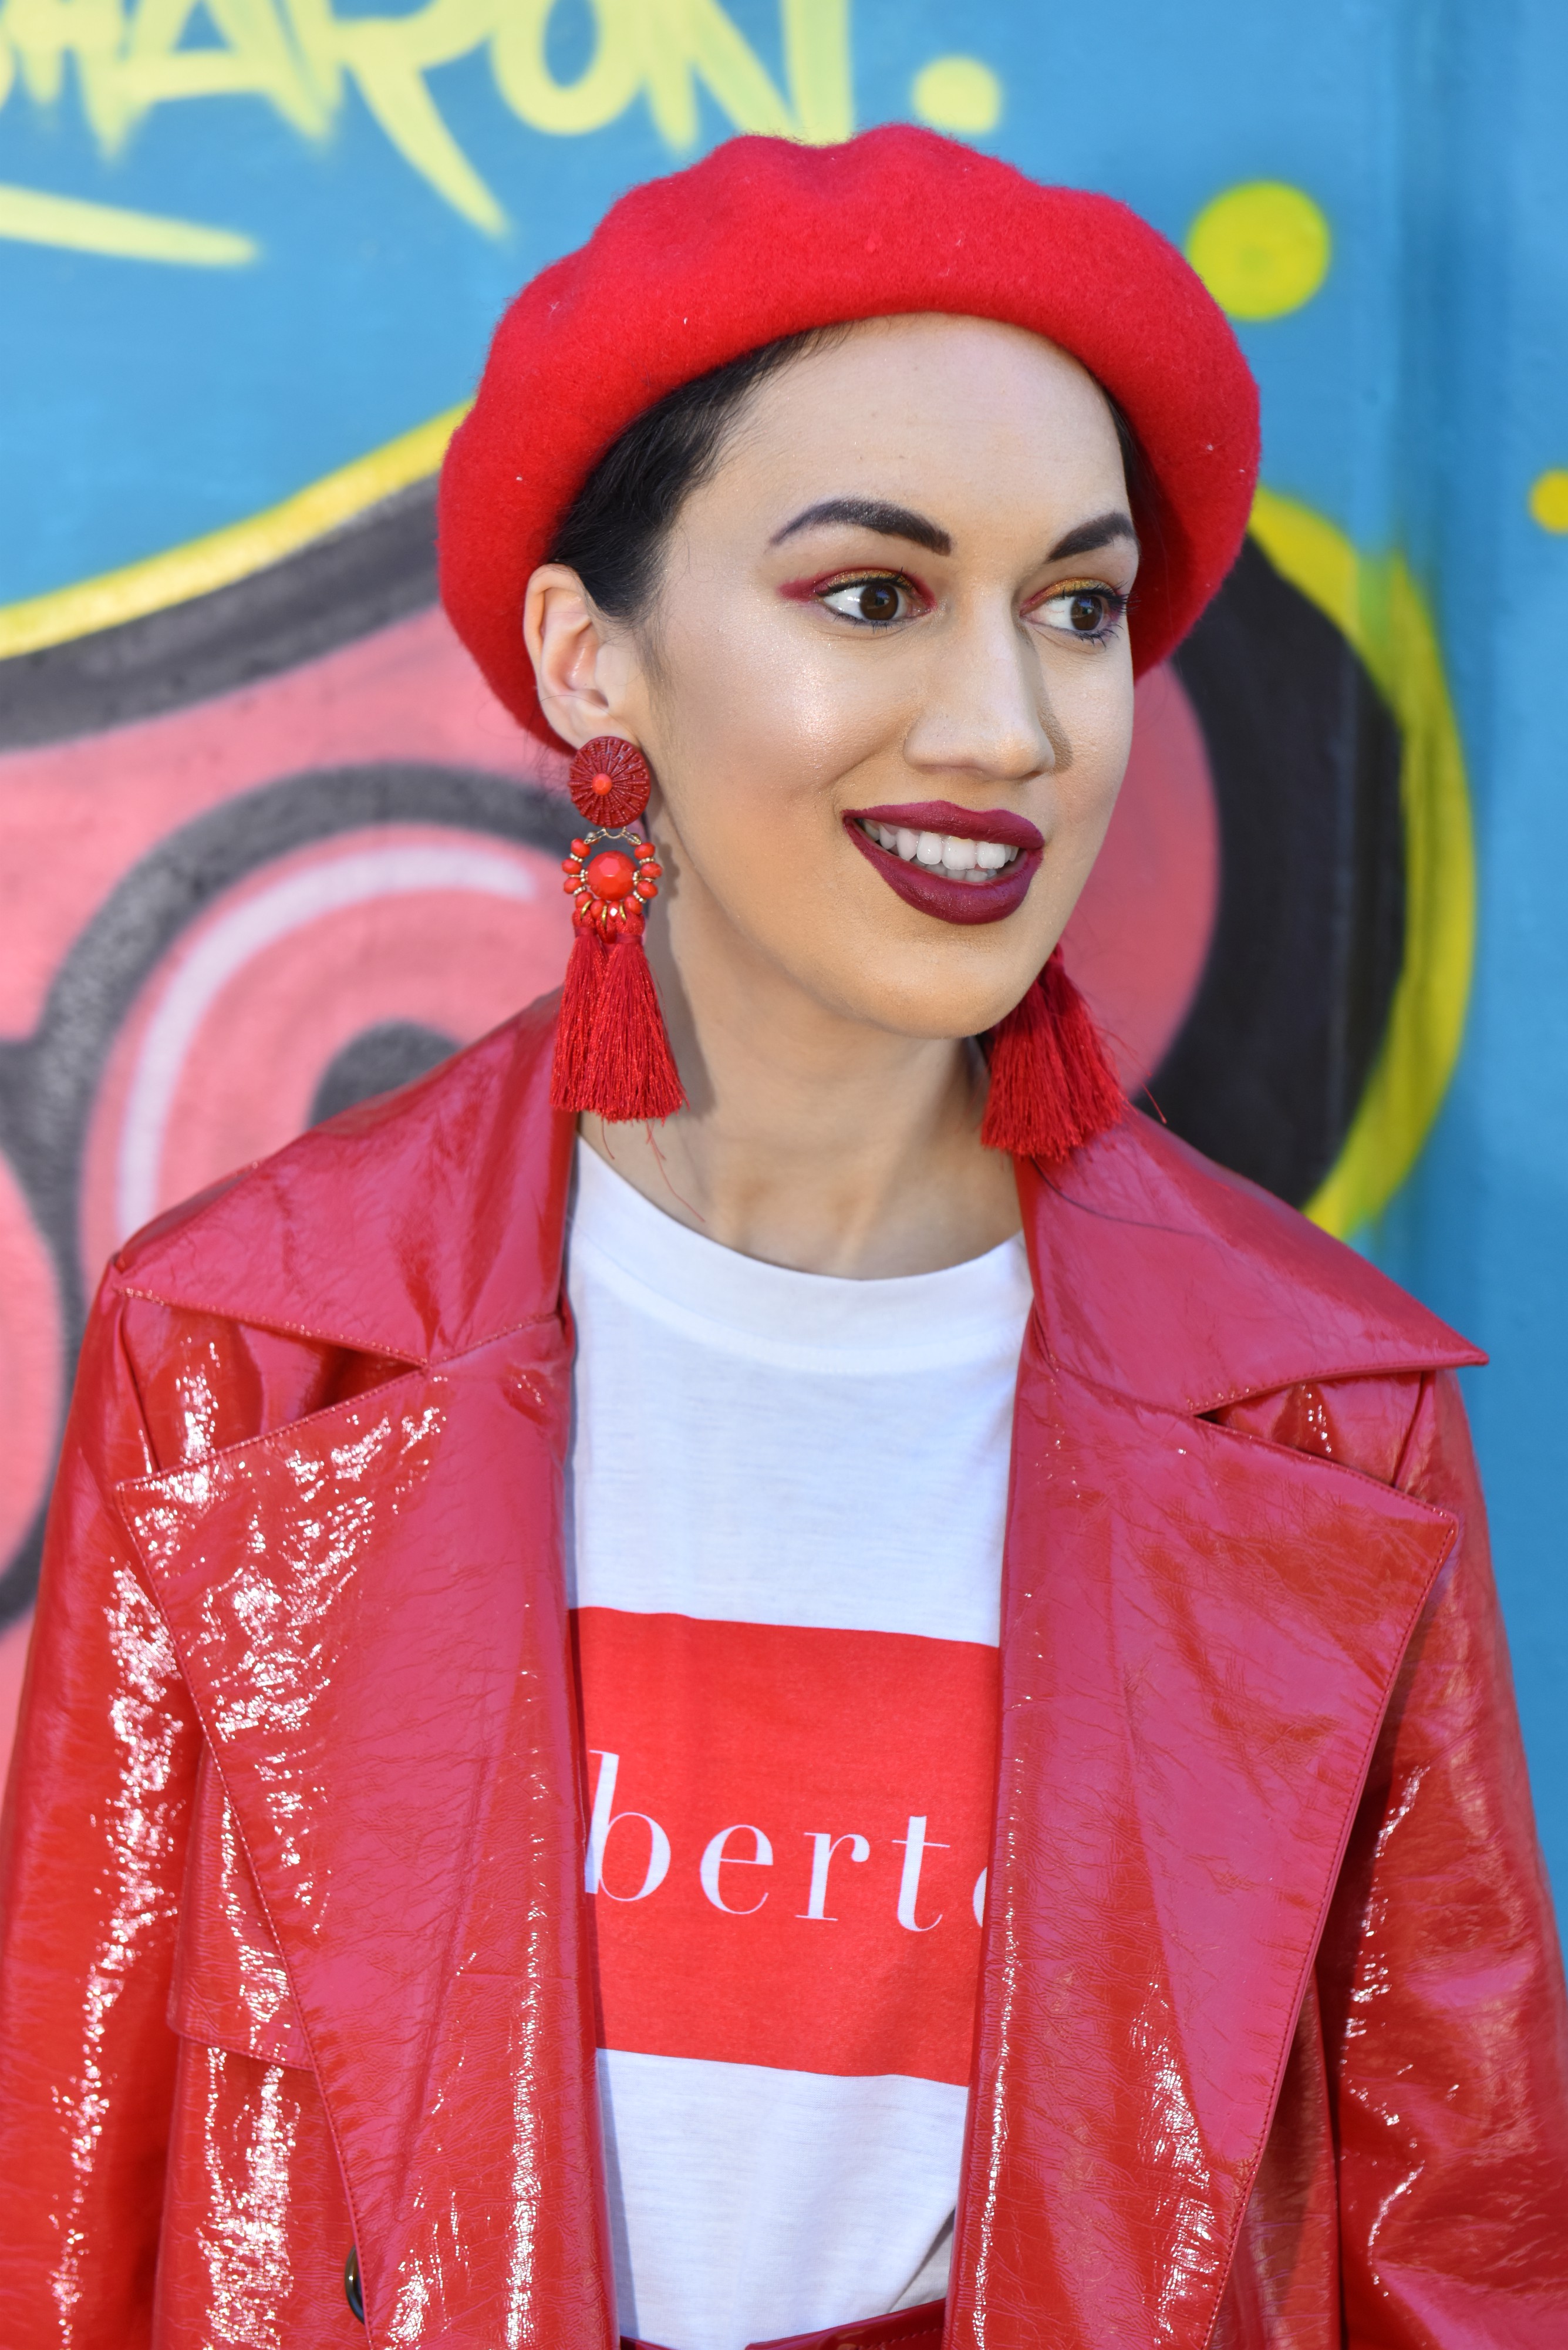 <img src="ana.jpg" alt="ana in red beret vintage fashion accessories"/> 